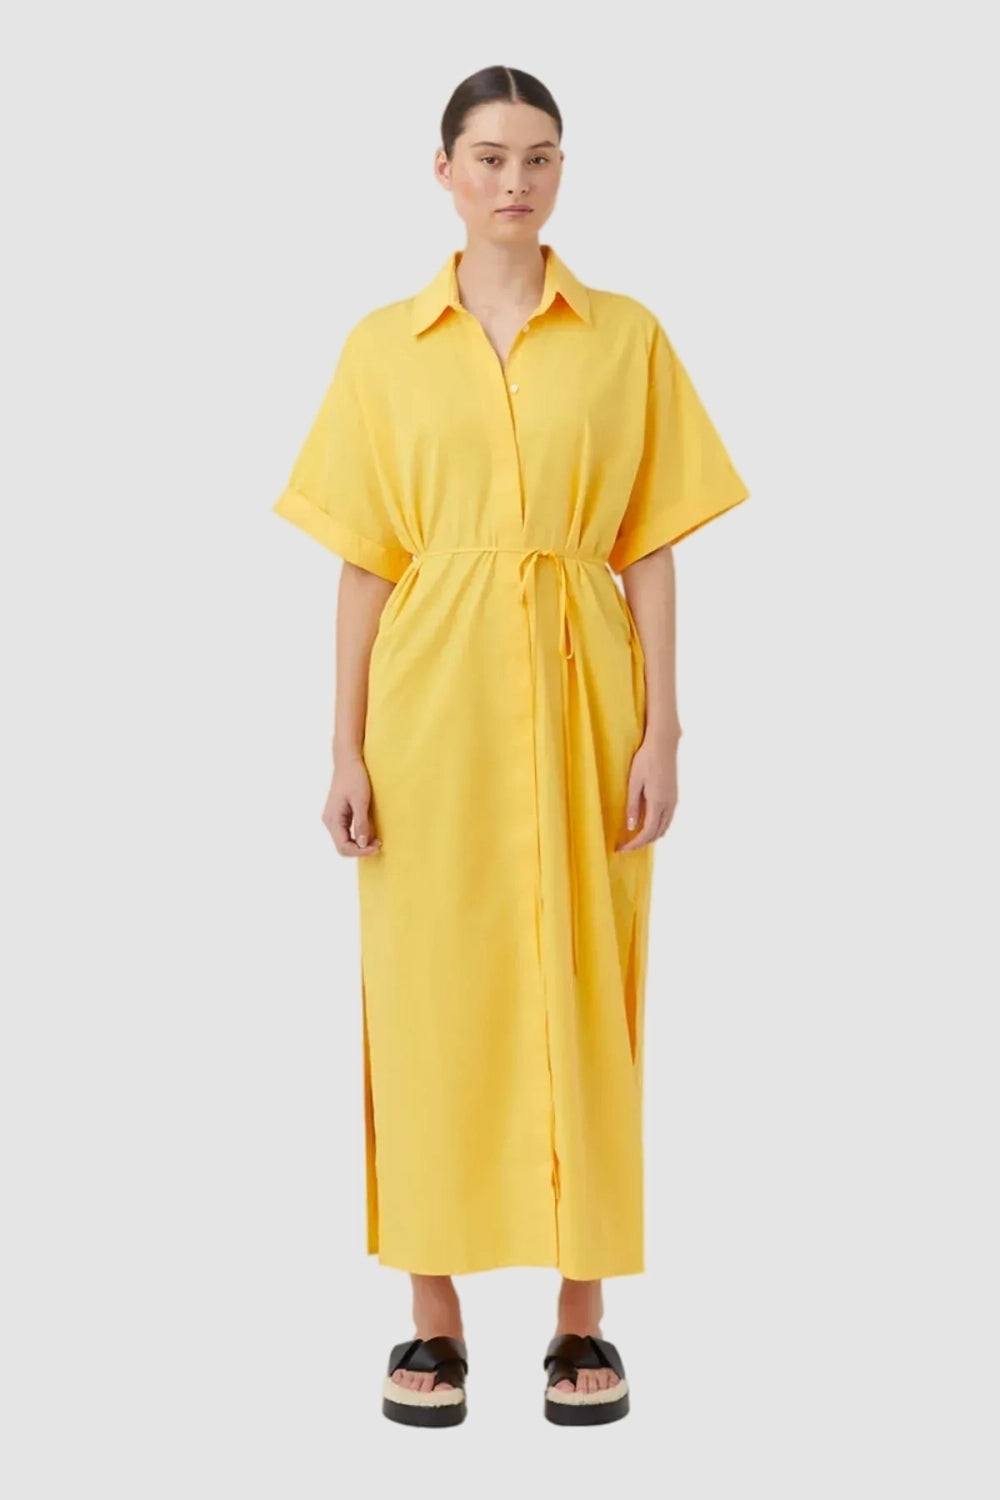 Earthscape Yellow Dress